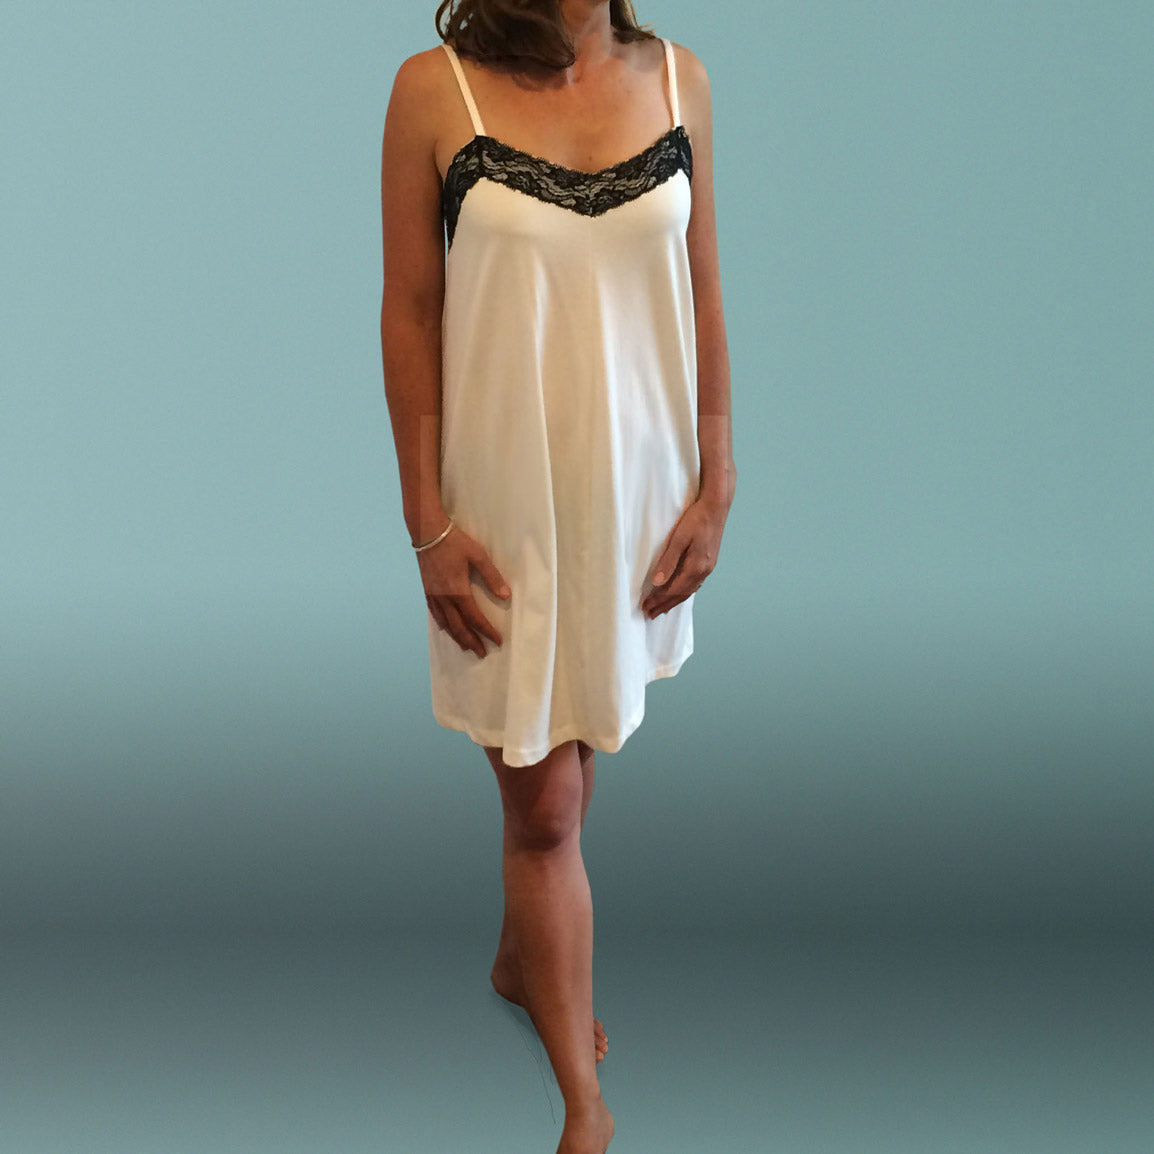 Womens nighties Australia. Organic cotton and lace nightgown made in Australia.